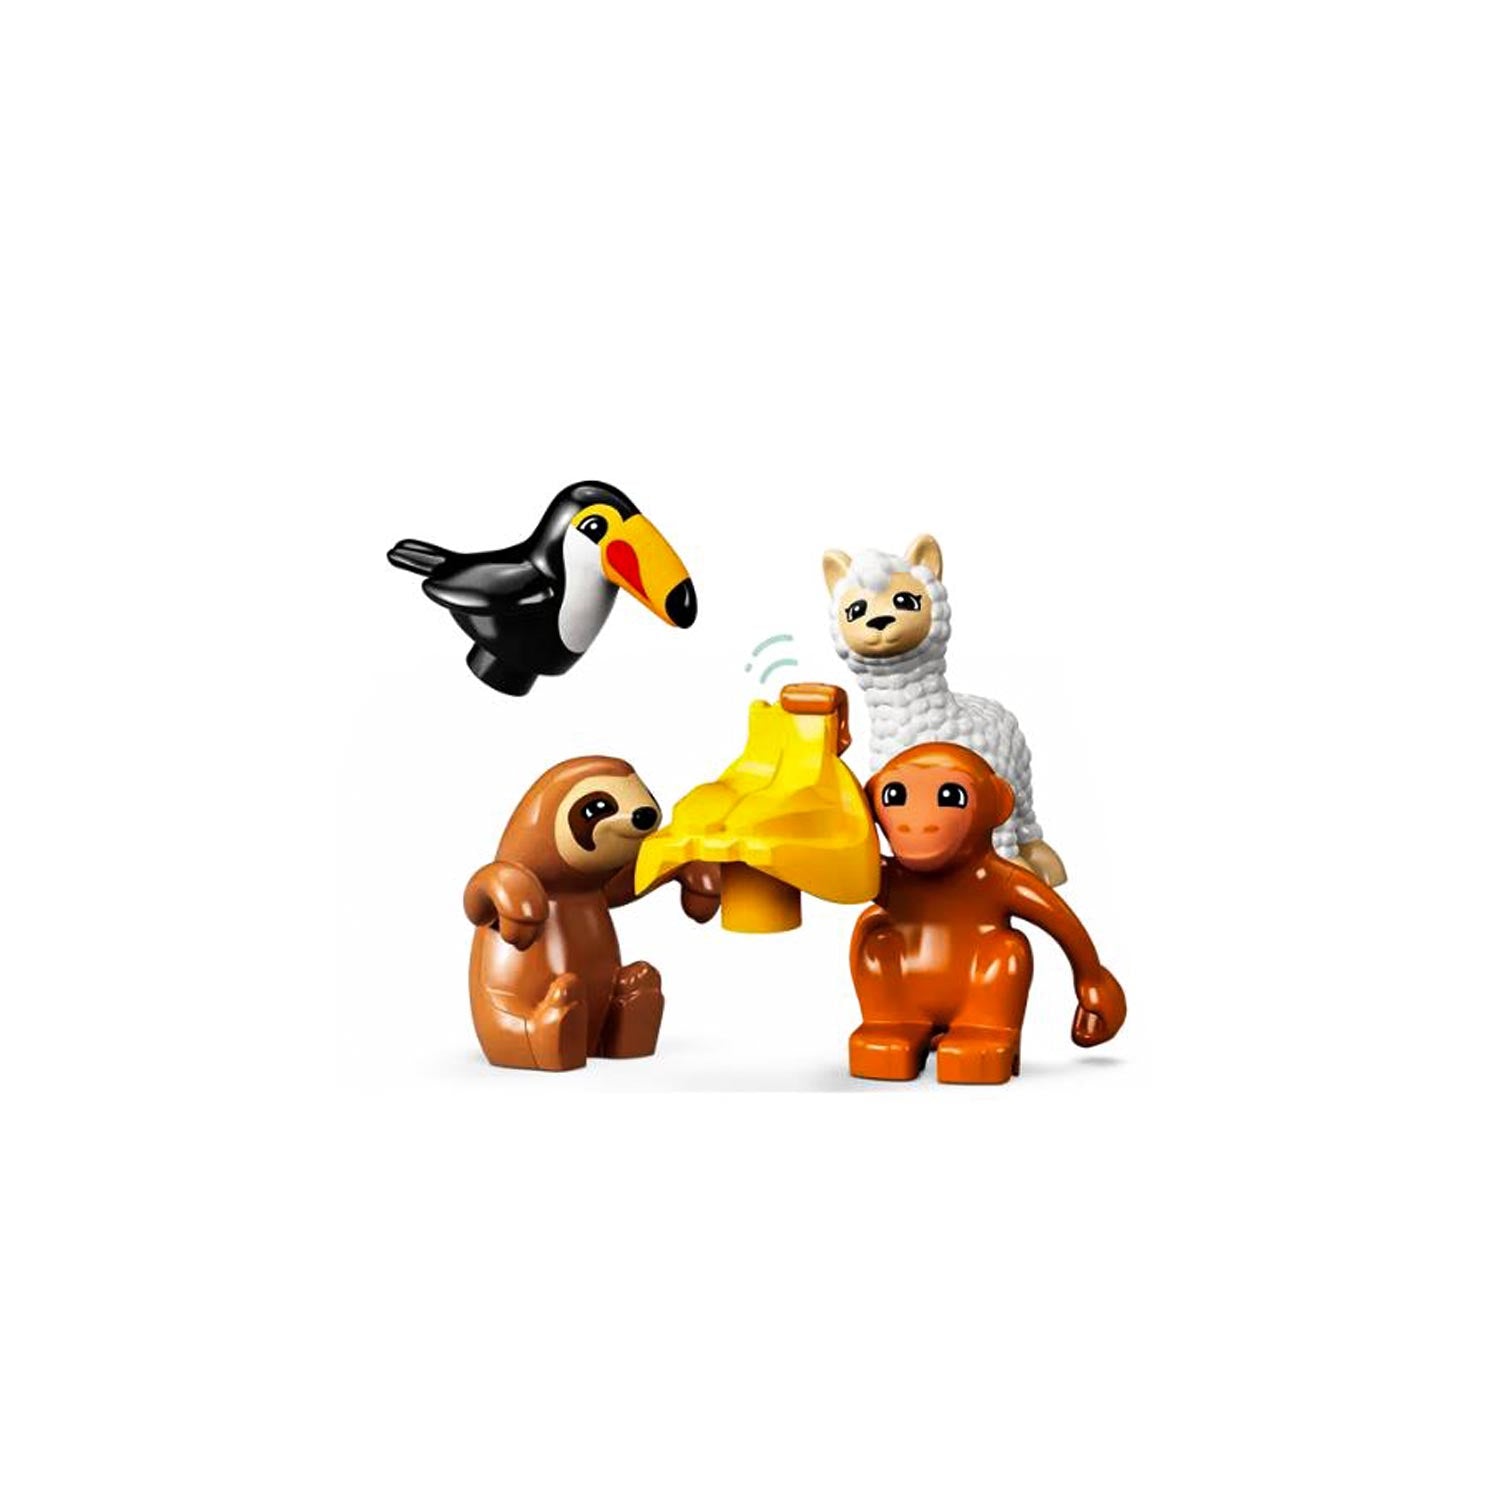 LEGO DUPLO Wild Animals of South America set 2